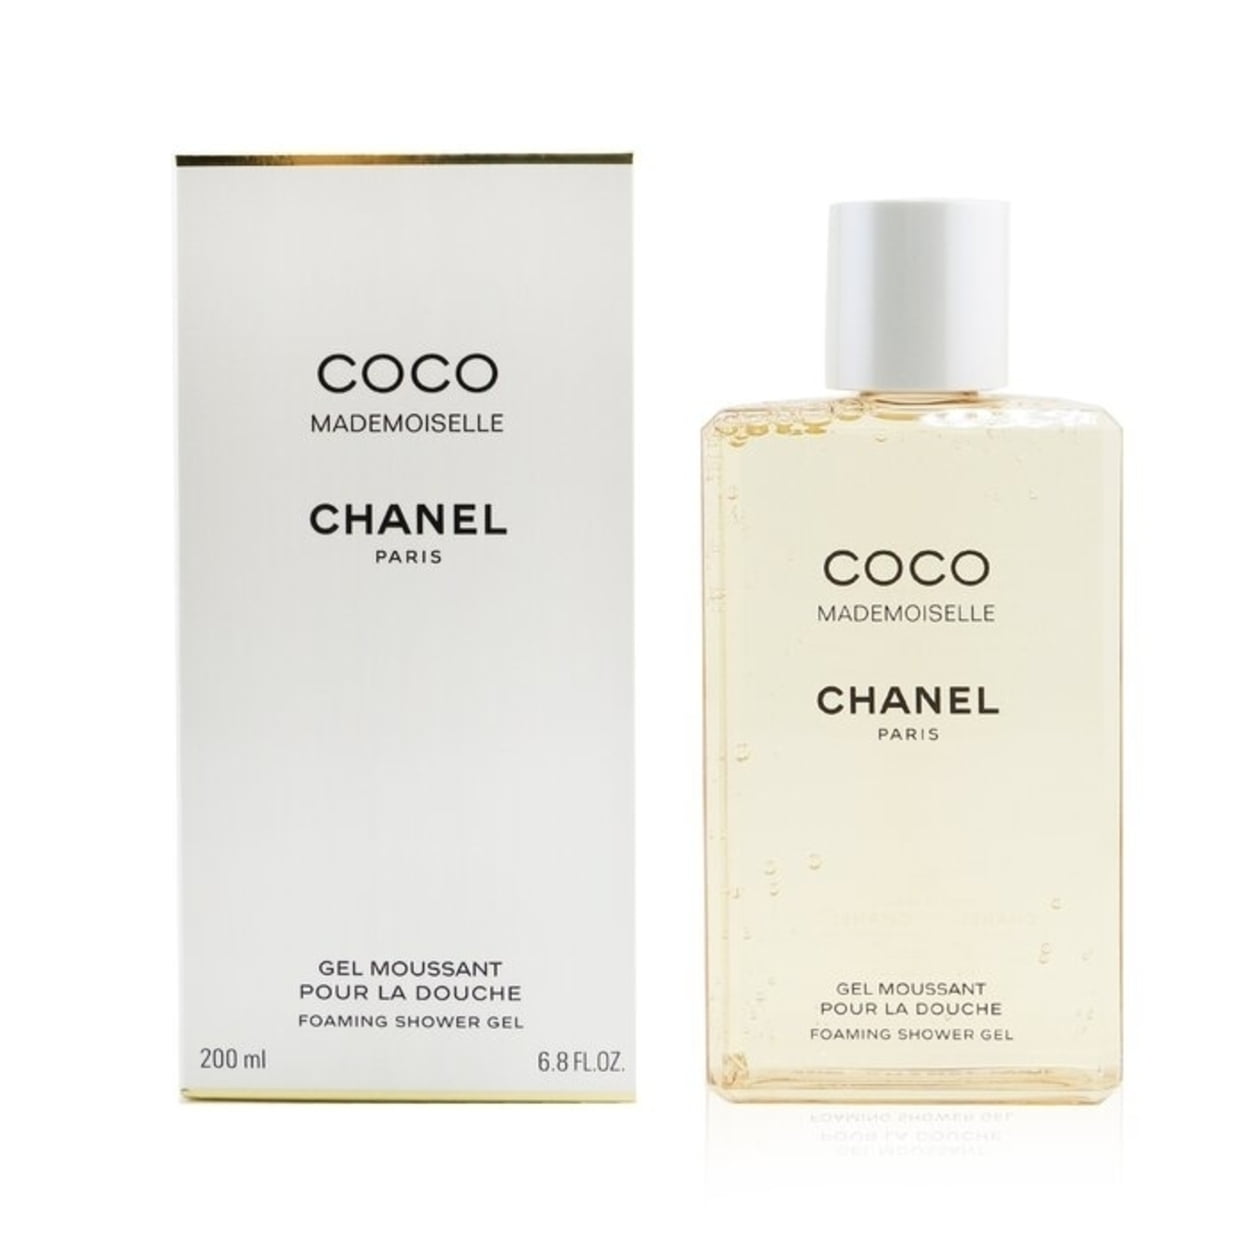 Chanel Shower Gel - 200 ml